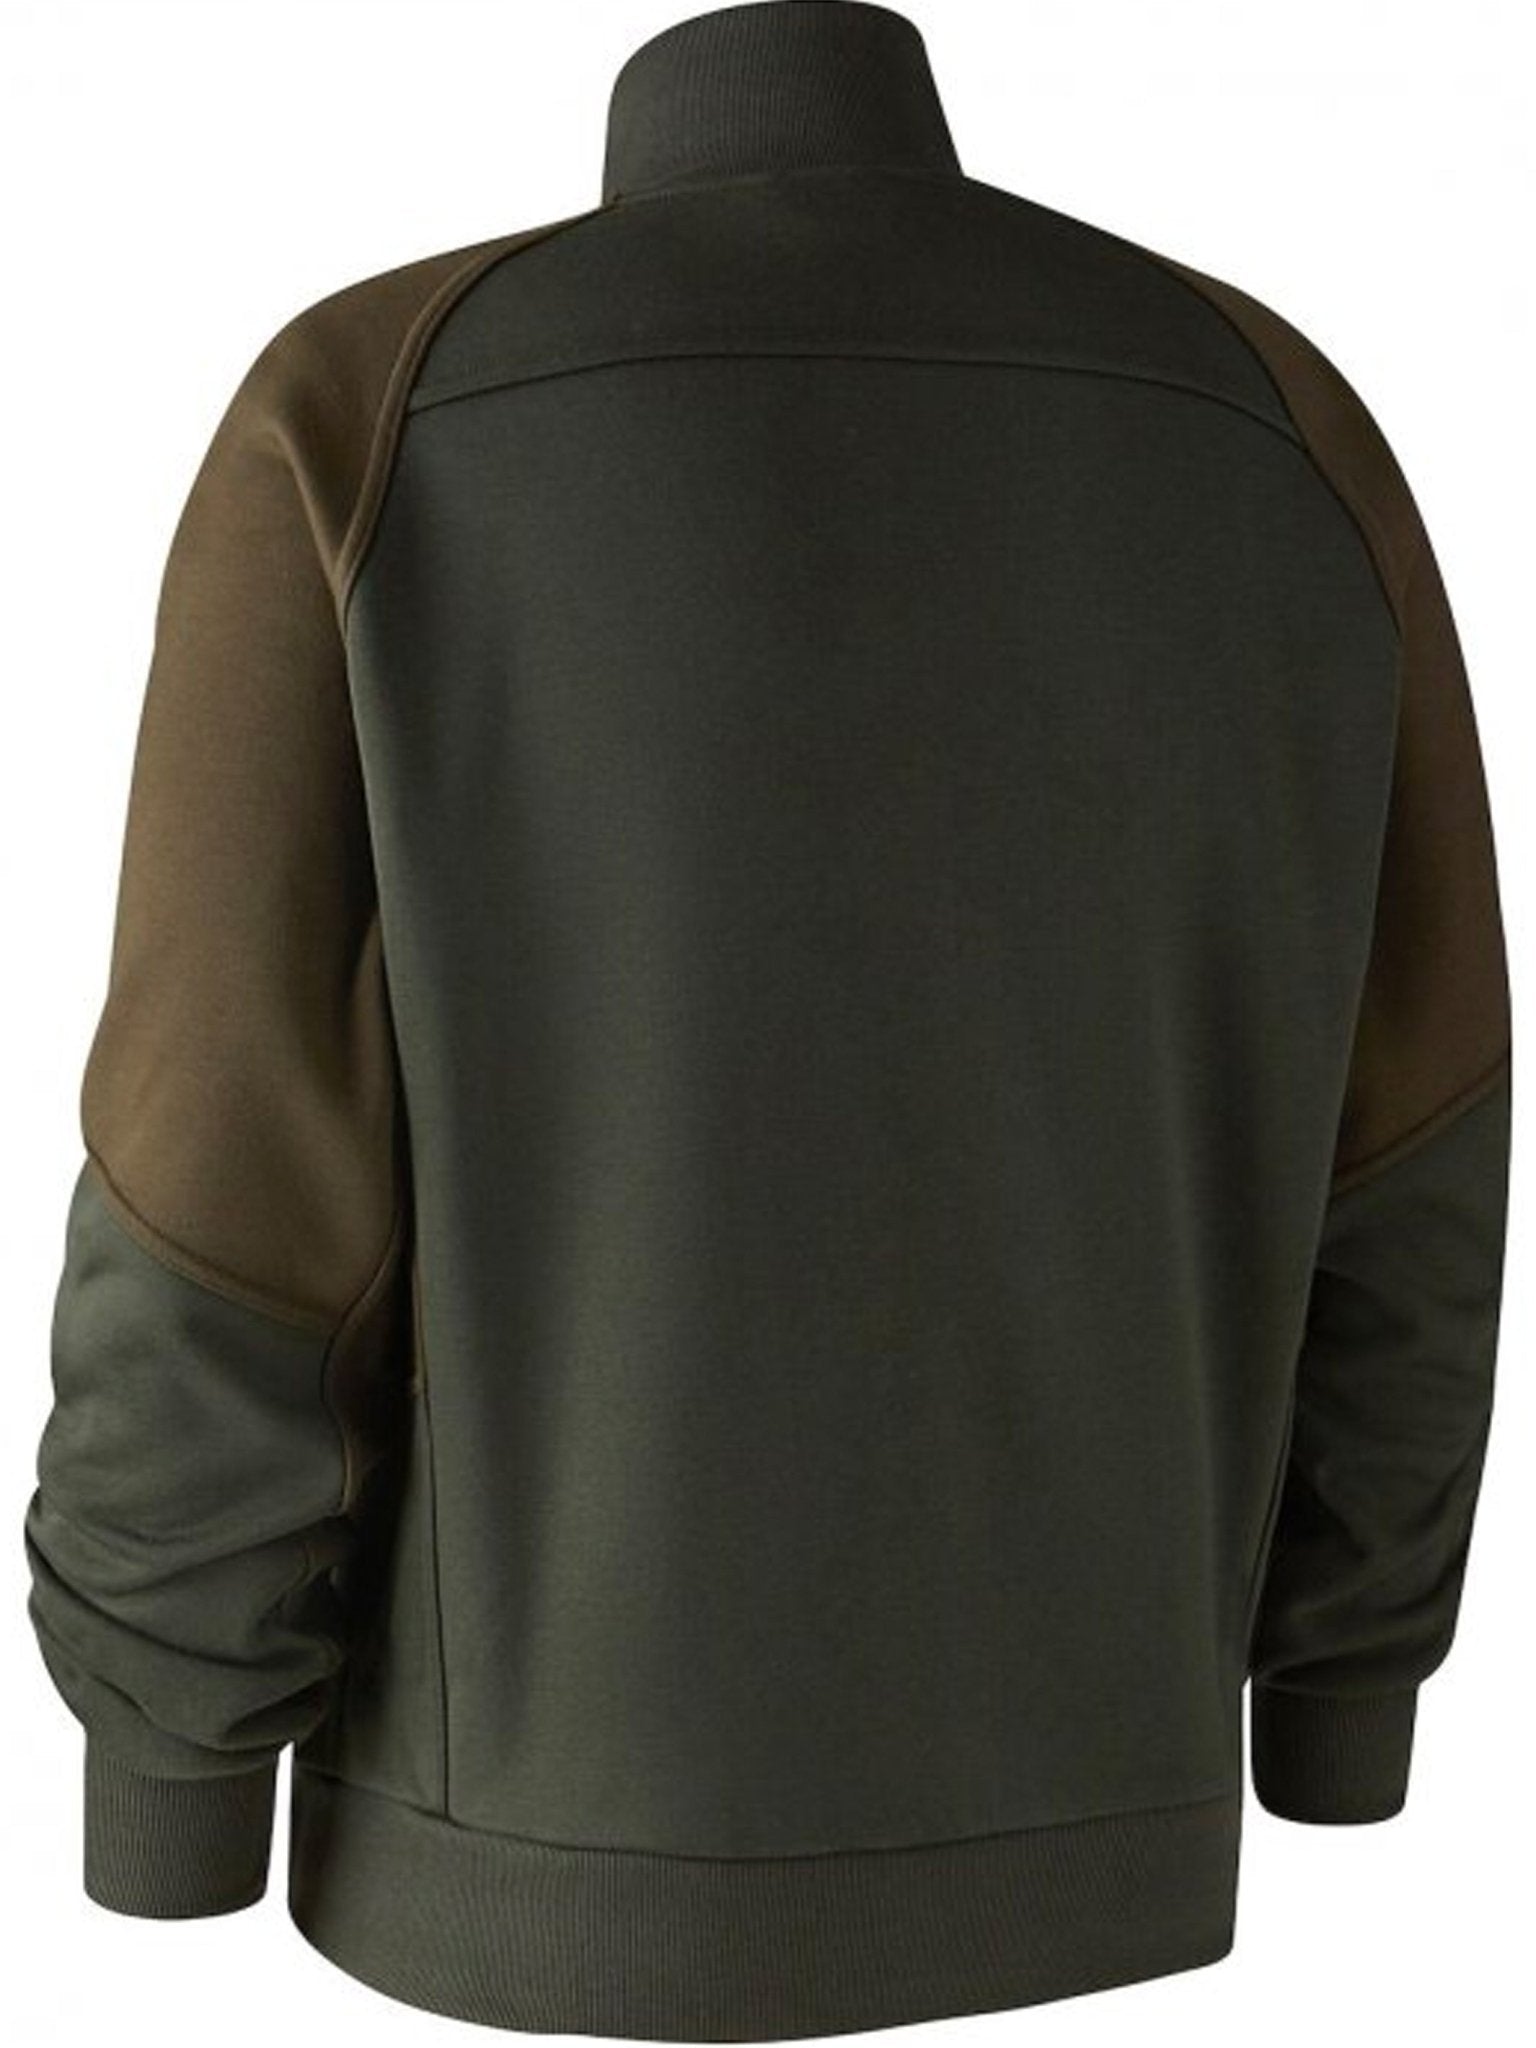 4elementsclothingDeerhunterDeerhunter - Rogaland Sweat with Rib Neck - Mens full zip sweater / fleece jacket in Adventure GreenKnitwear8772-353-S